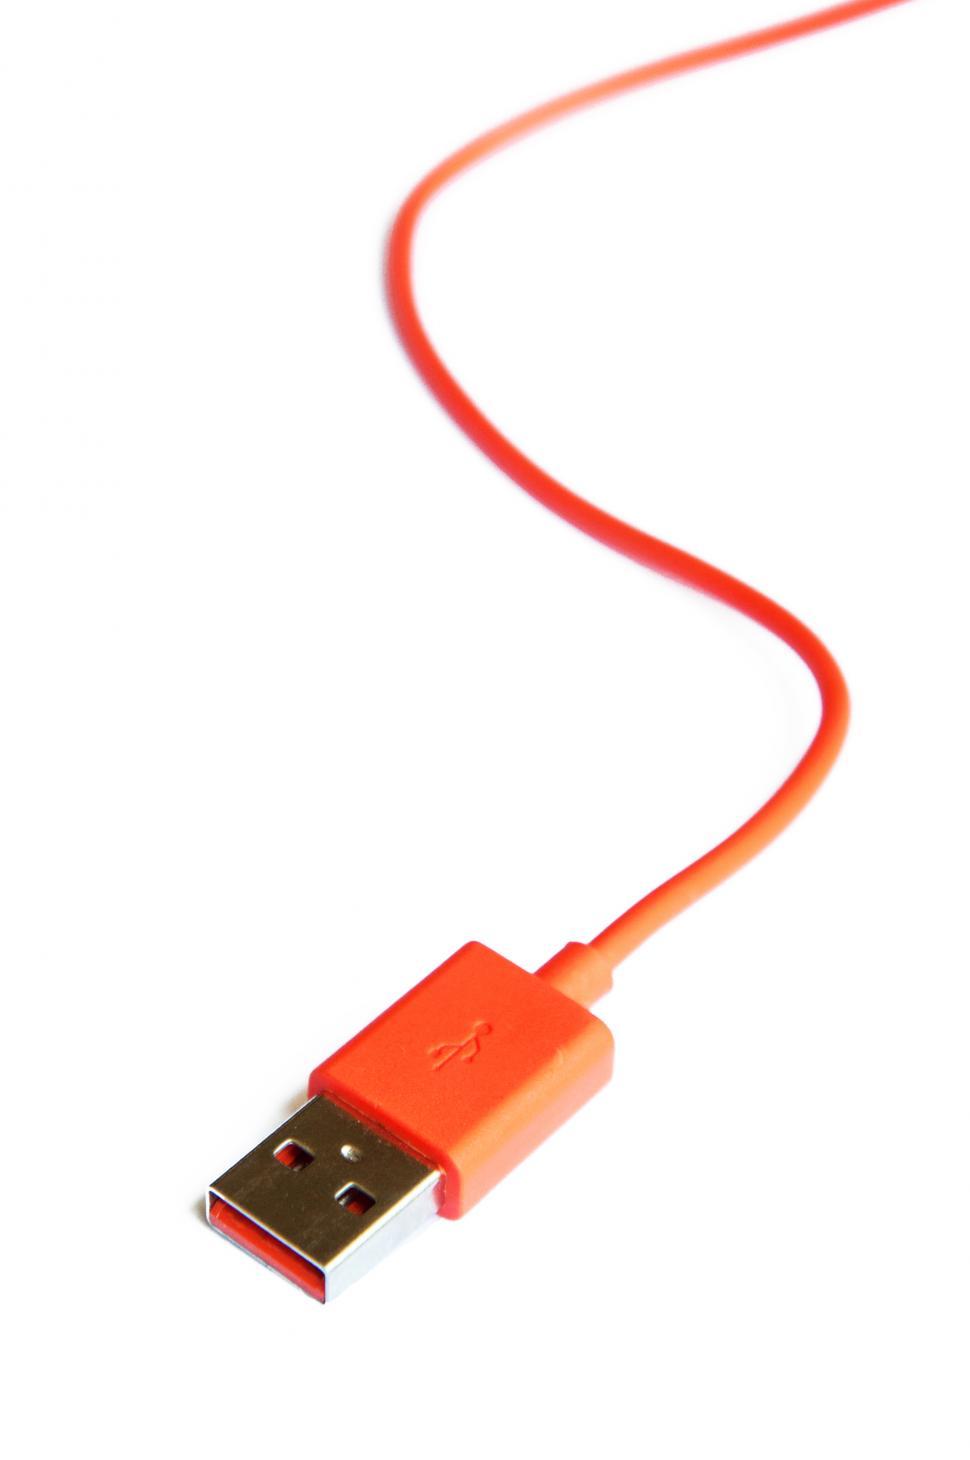 Free Image of USB Cable Plug isolated on White Background 